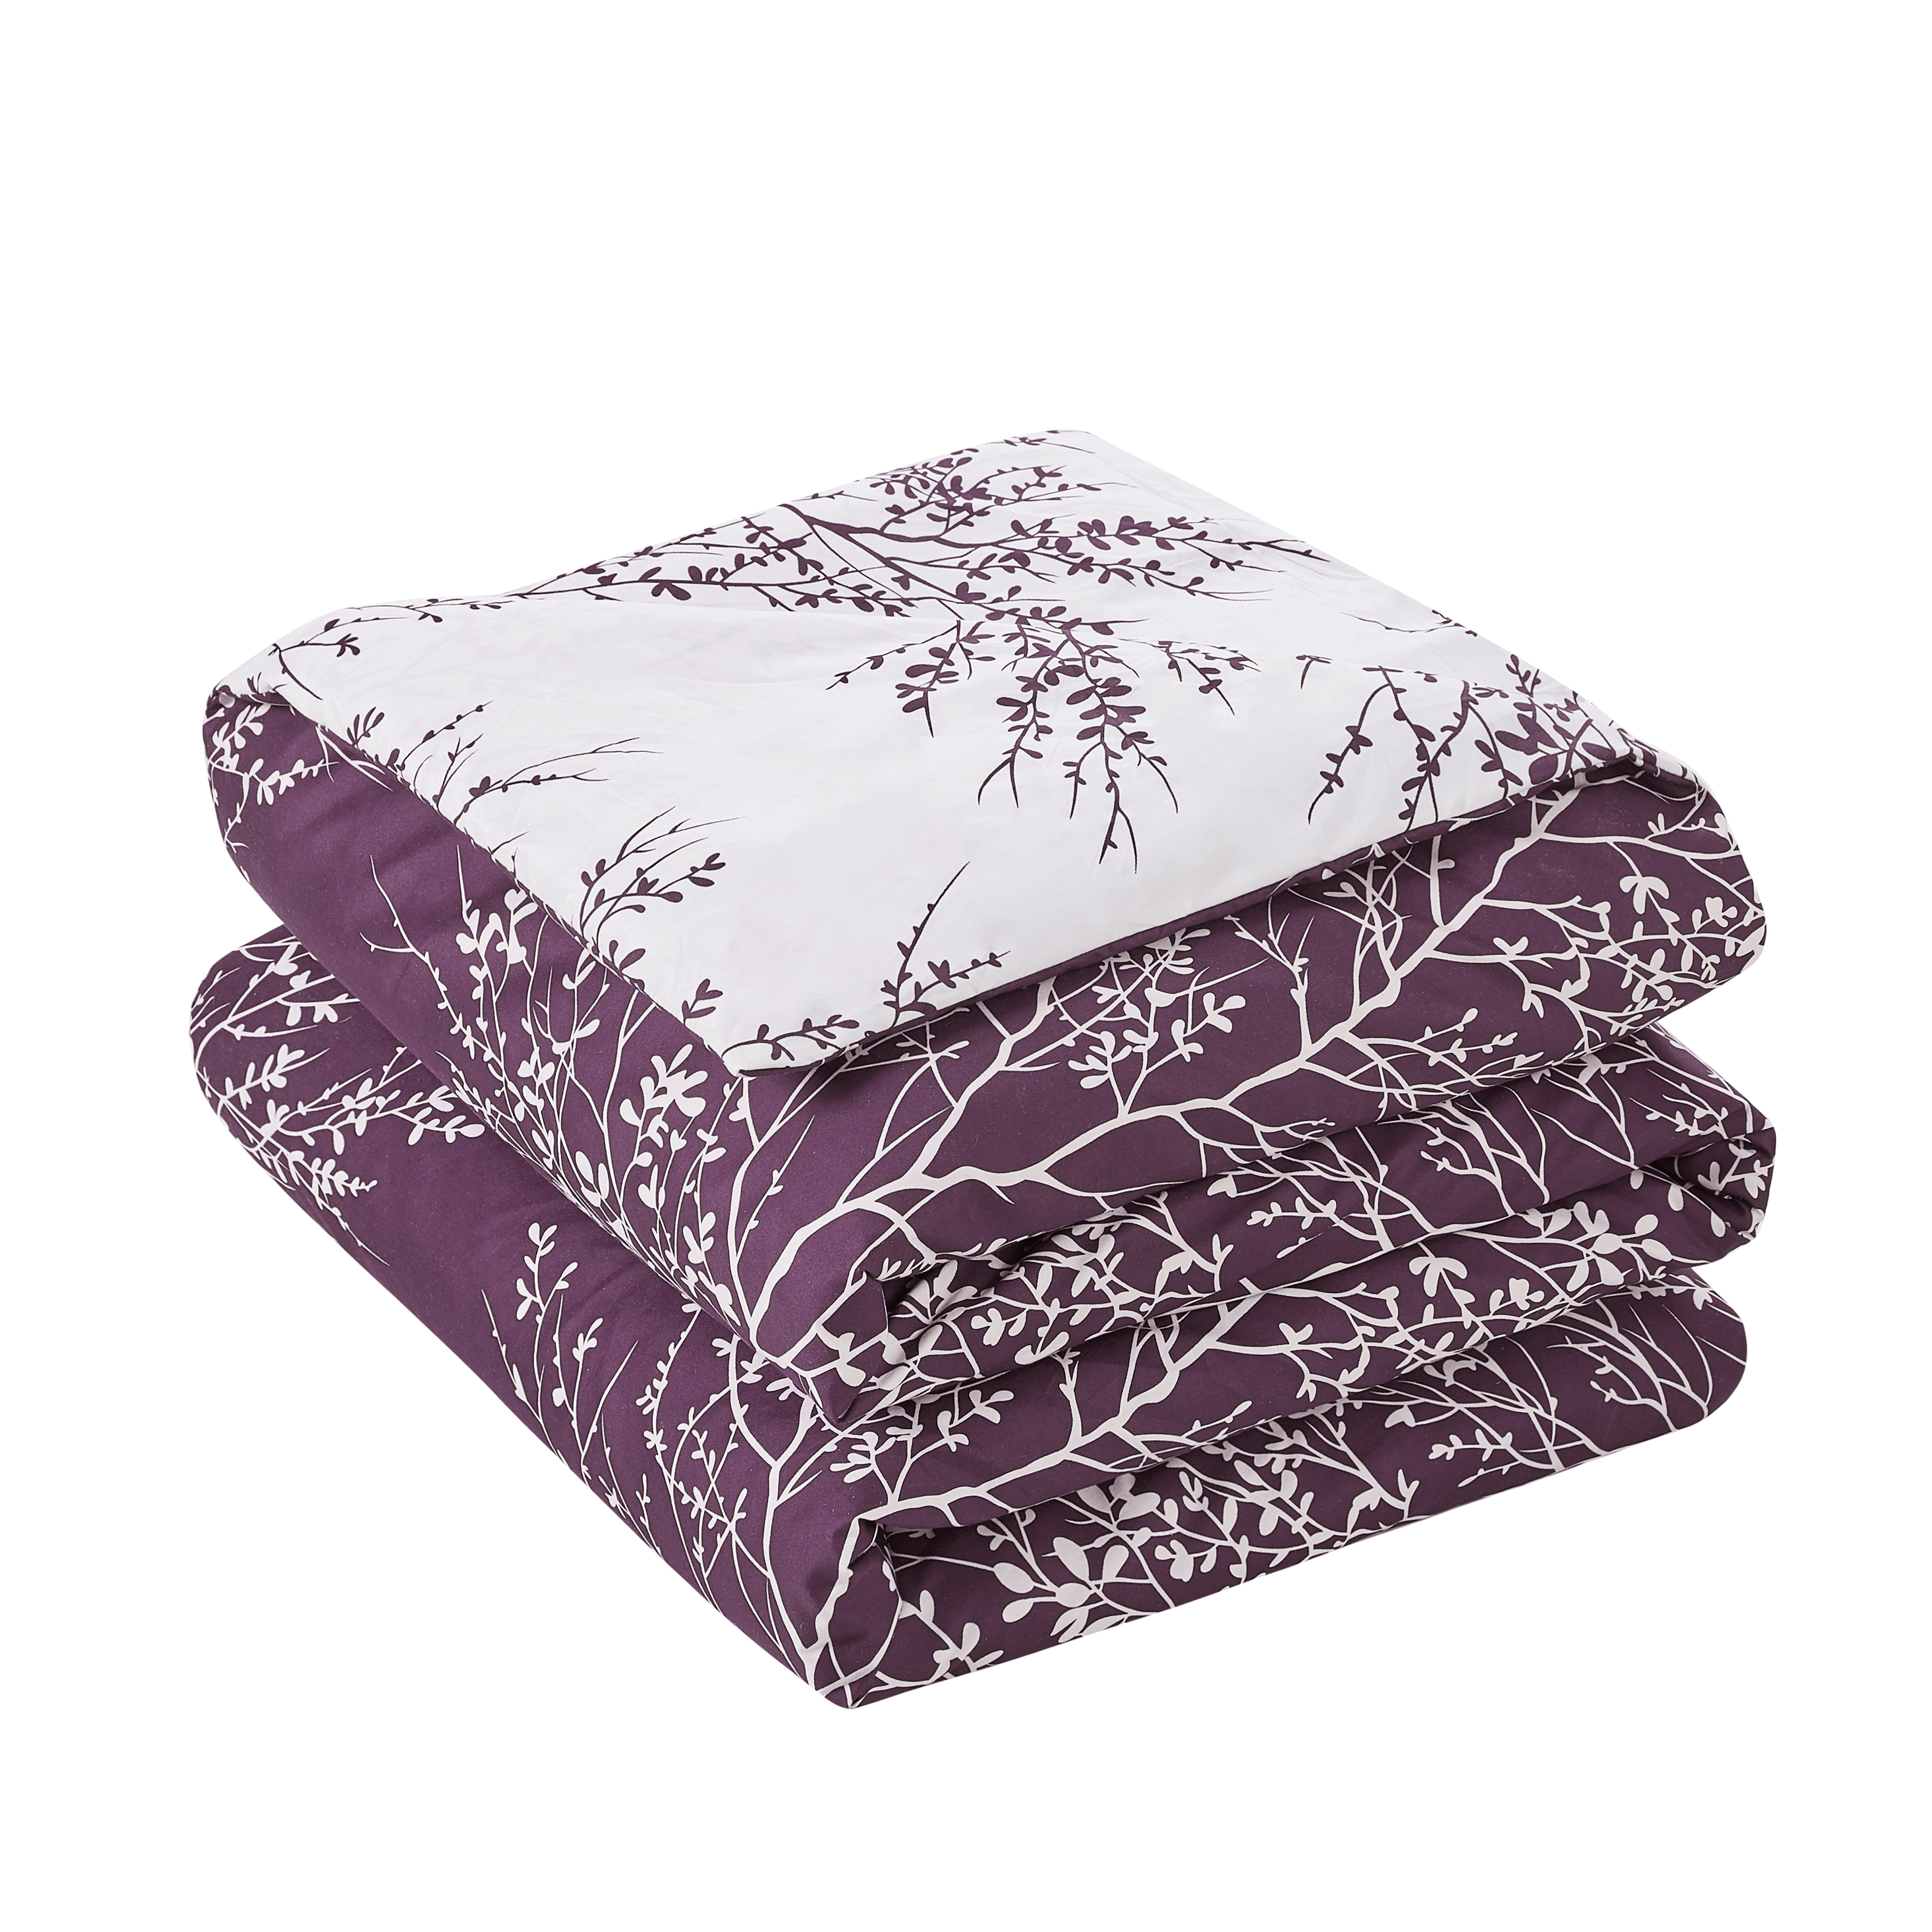 Foliage Reversible Comforter Set + Two Free Sham Pillows - Spirit Linen - Lilac